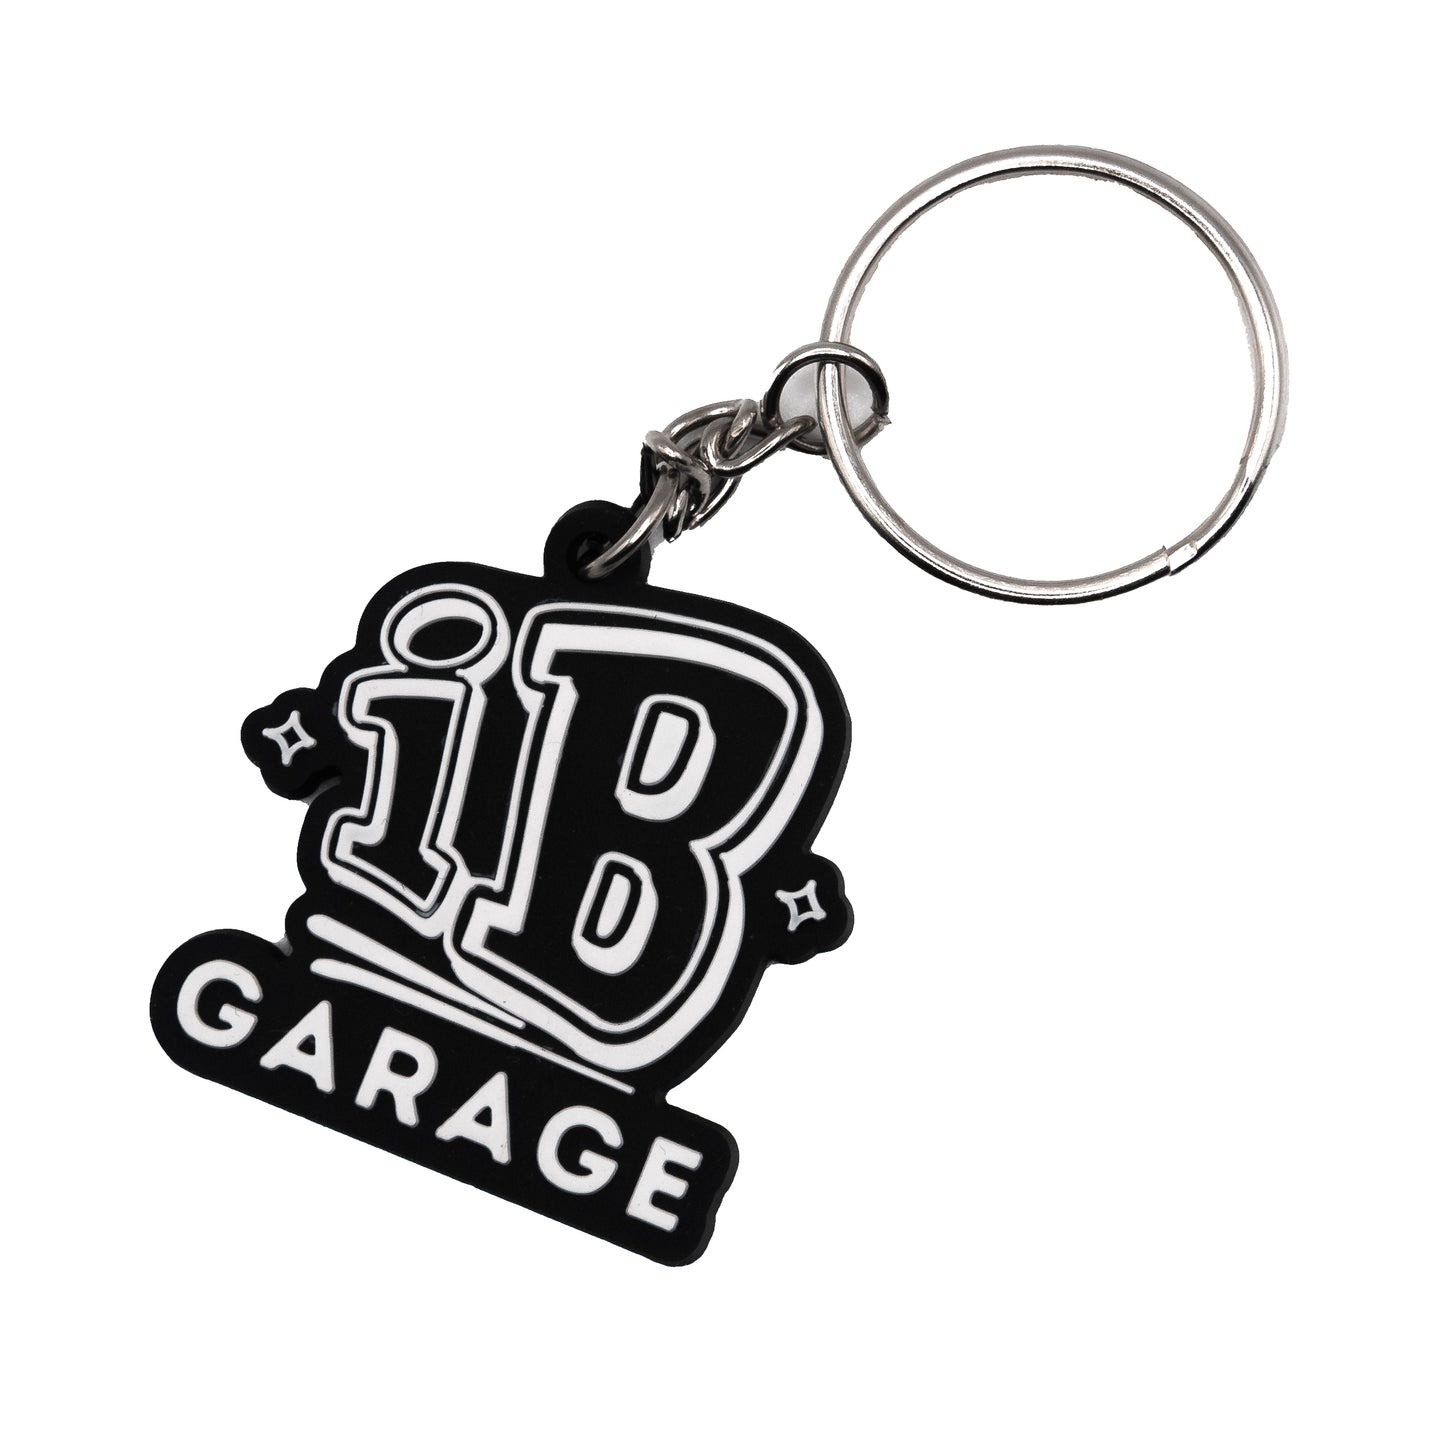 iB Garage Keychain